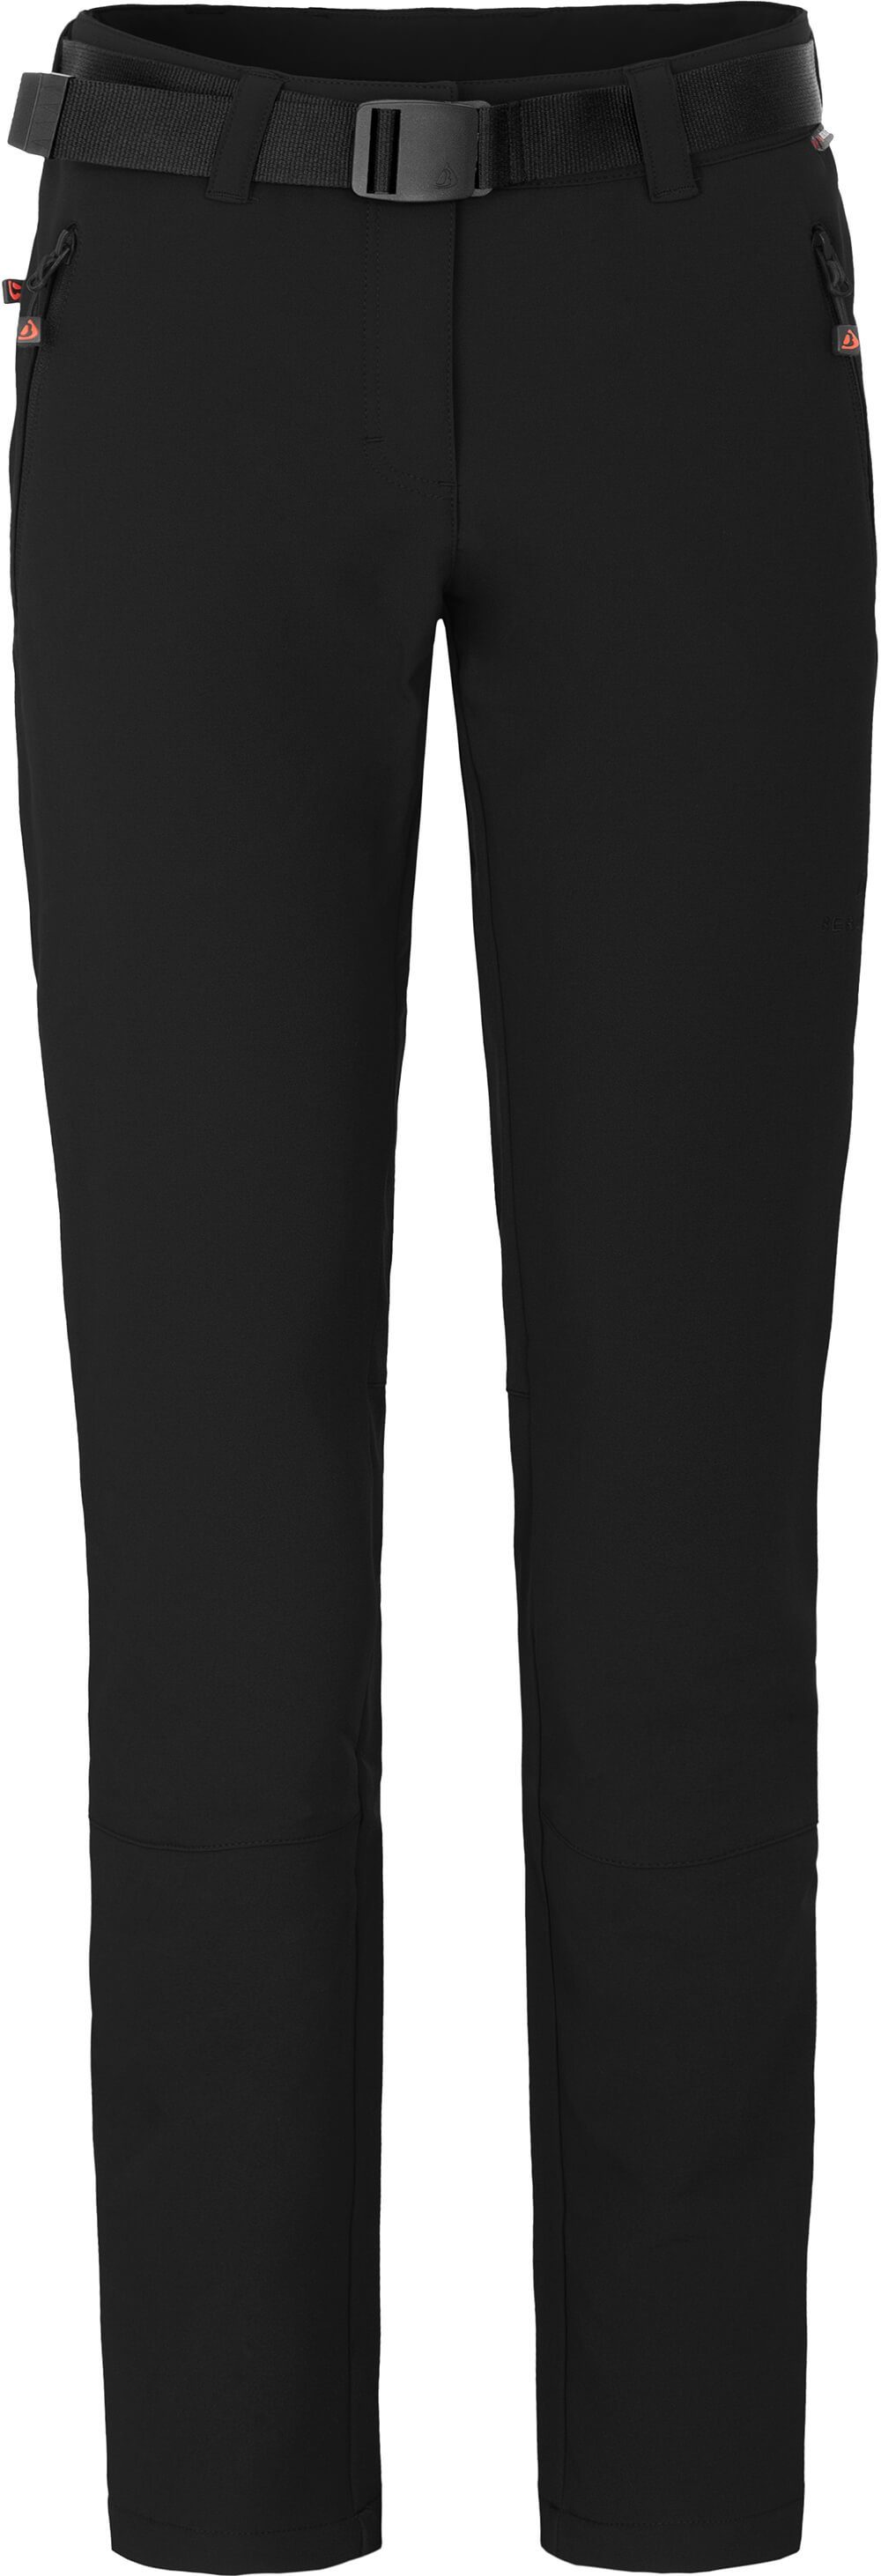 Bergson Outdoorhose recycelt, schwarz warm, Damen Kurzgrößen, KEITA Winter-Wanderhose